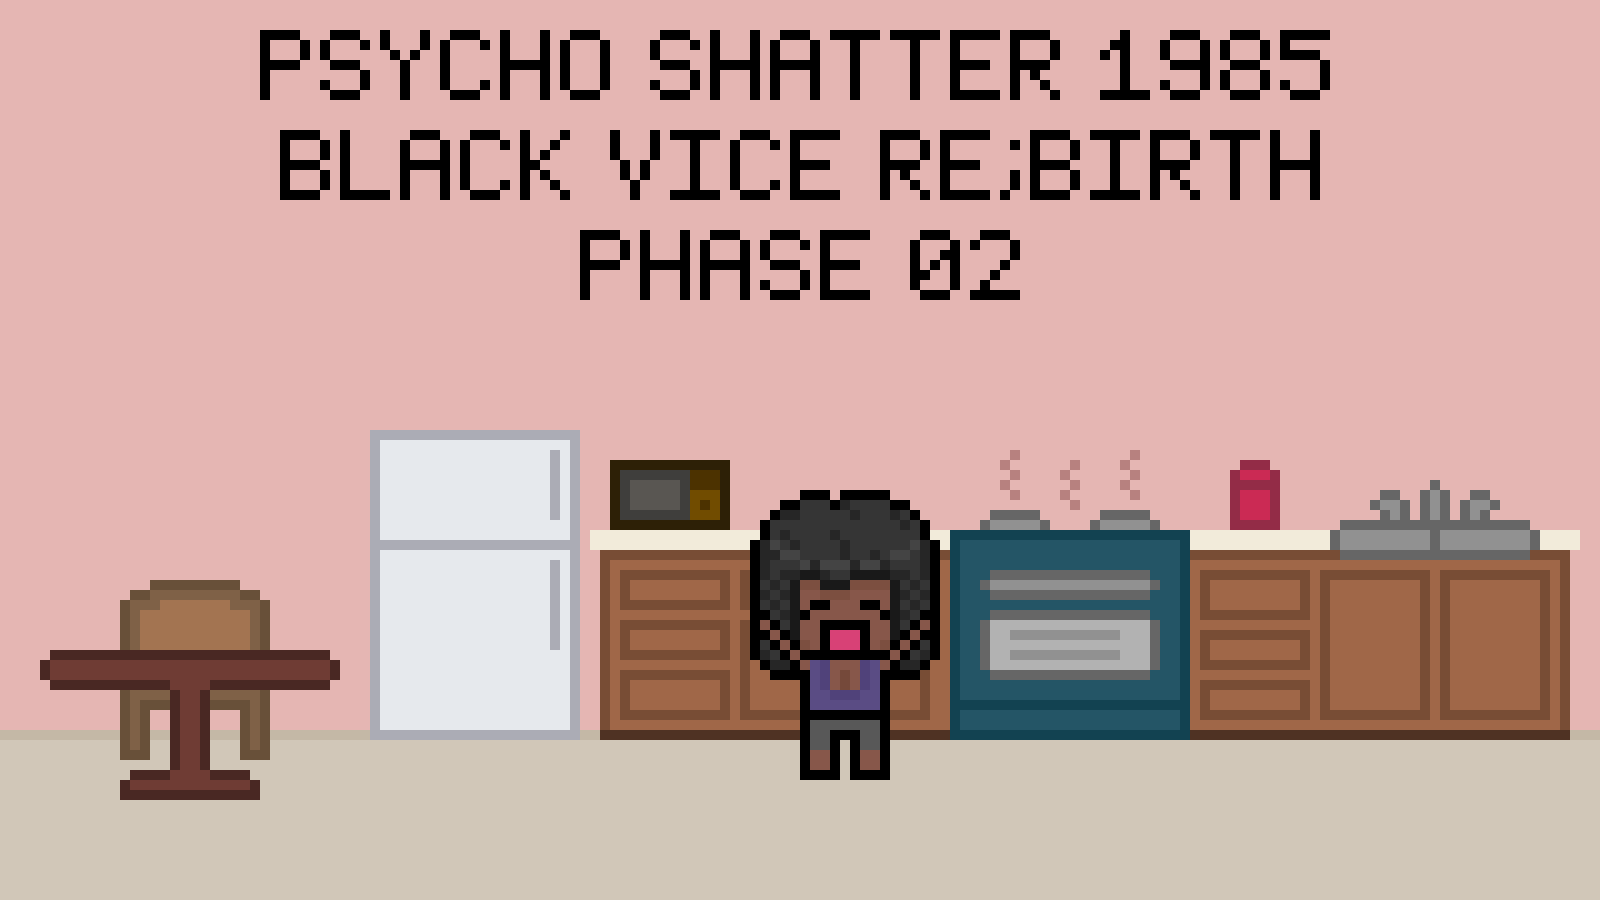 psycho-shatter-1985-black-vice-rebirth-ch-02.png